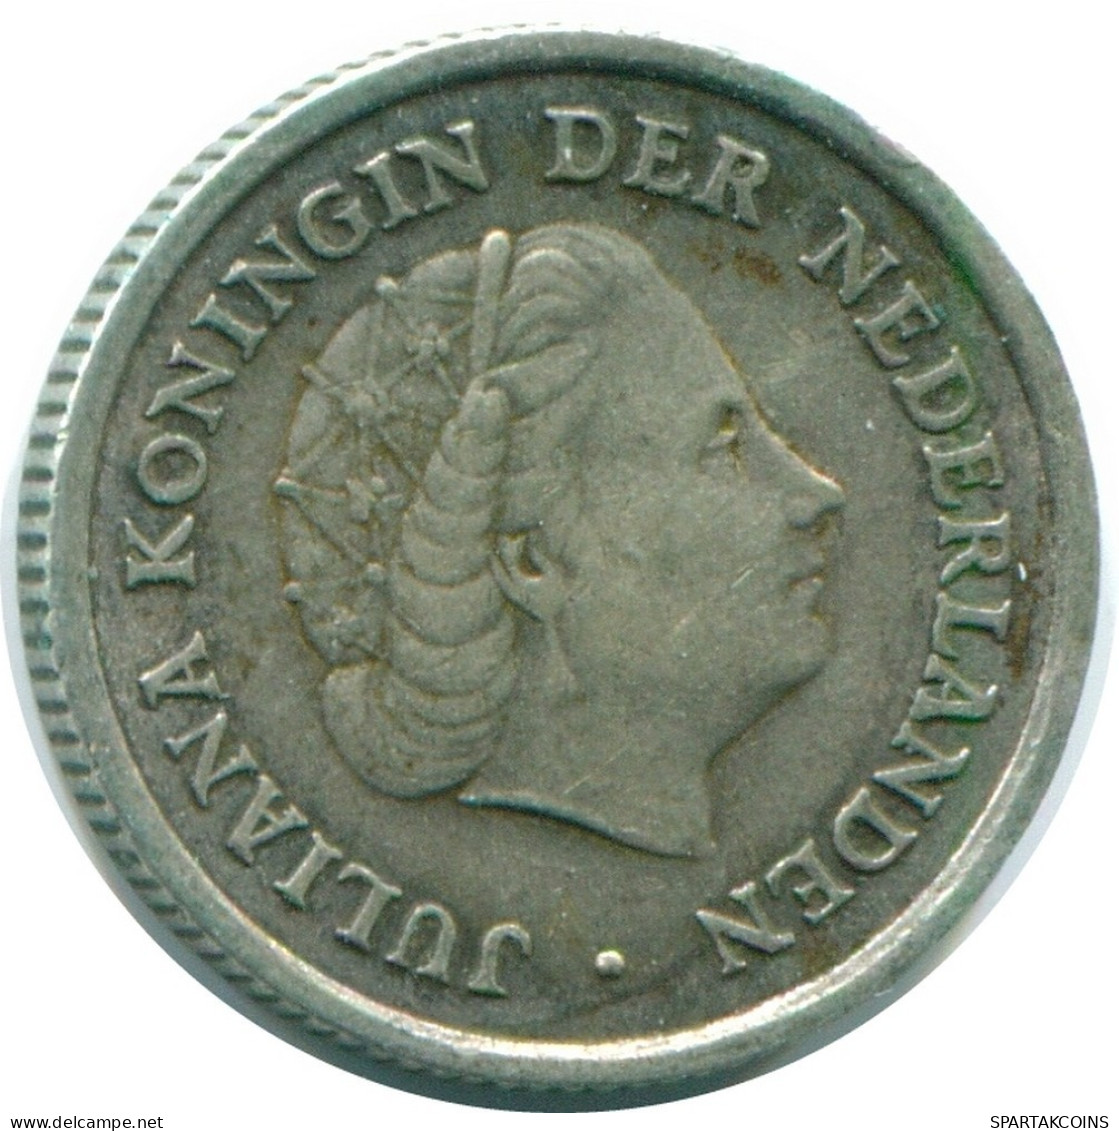 1/10 GULDEN 1962 NETHERLANDS ANTILLES SILVER Colonial Coin #NL12419.3.U.A - Nederlandse Antillen